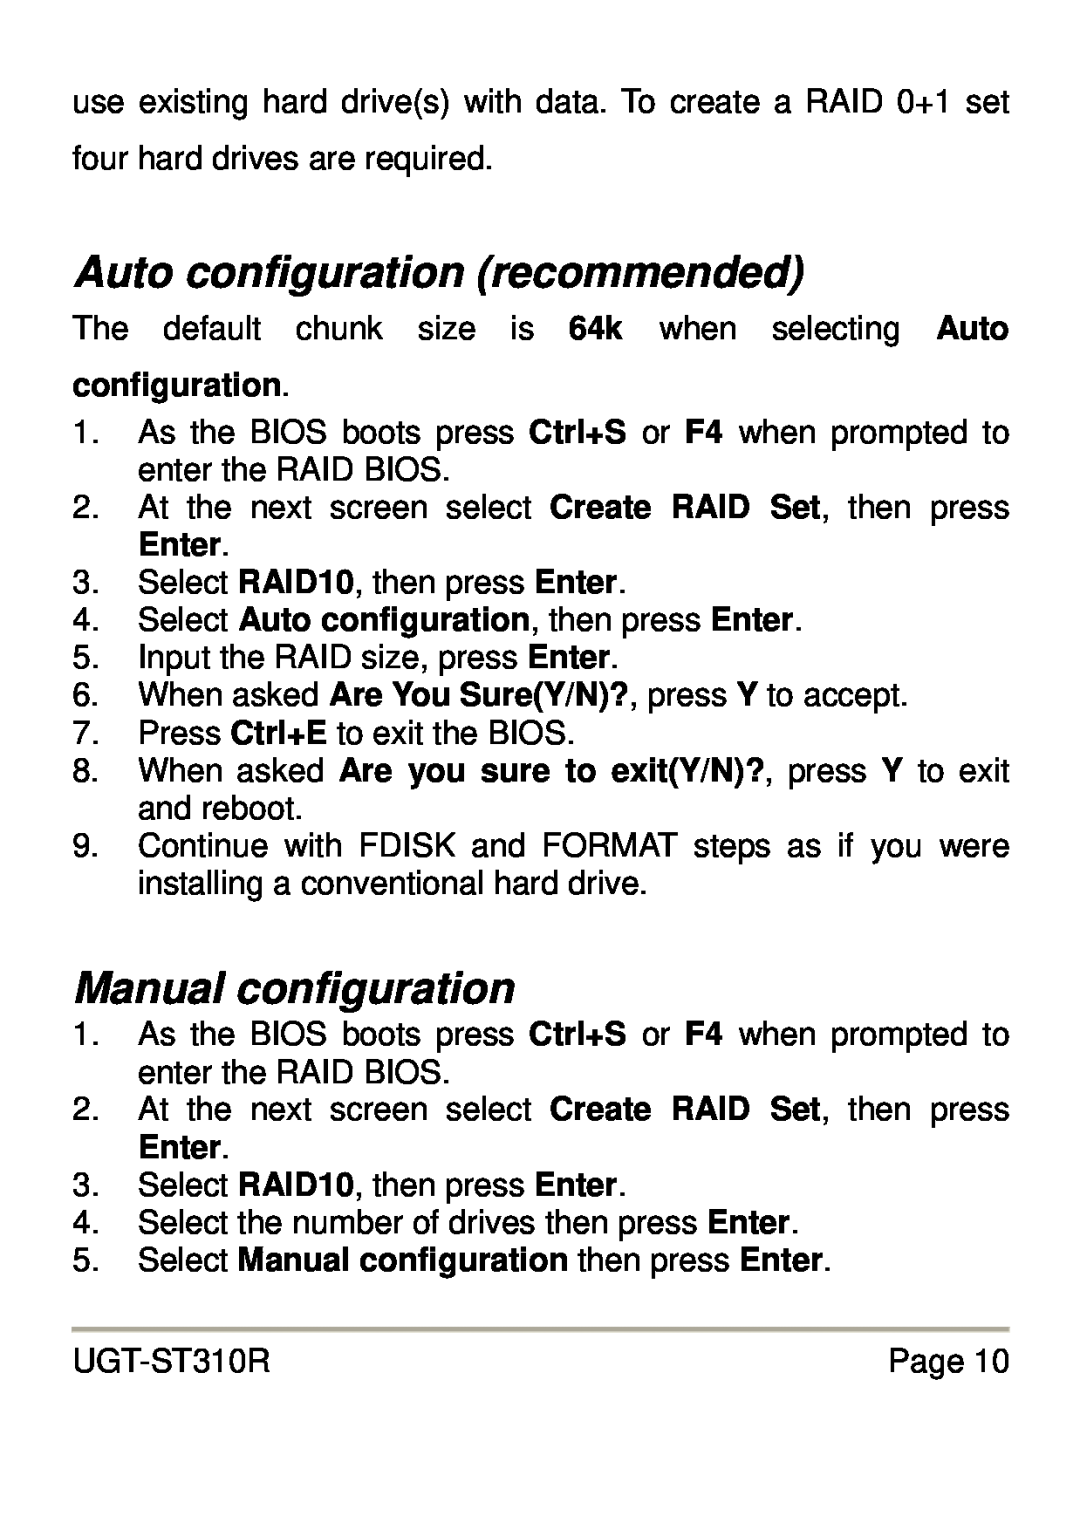 Vantec UGT-ST310R Auto configuration recommended, Manual configuration, Select Auto configuration, then press Enter 